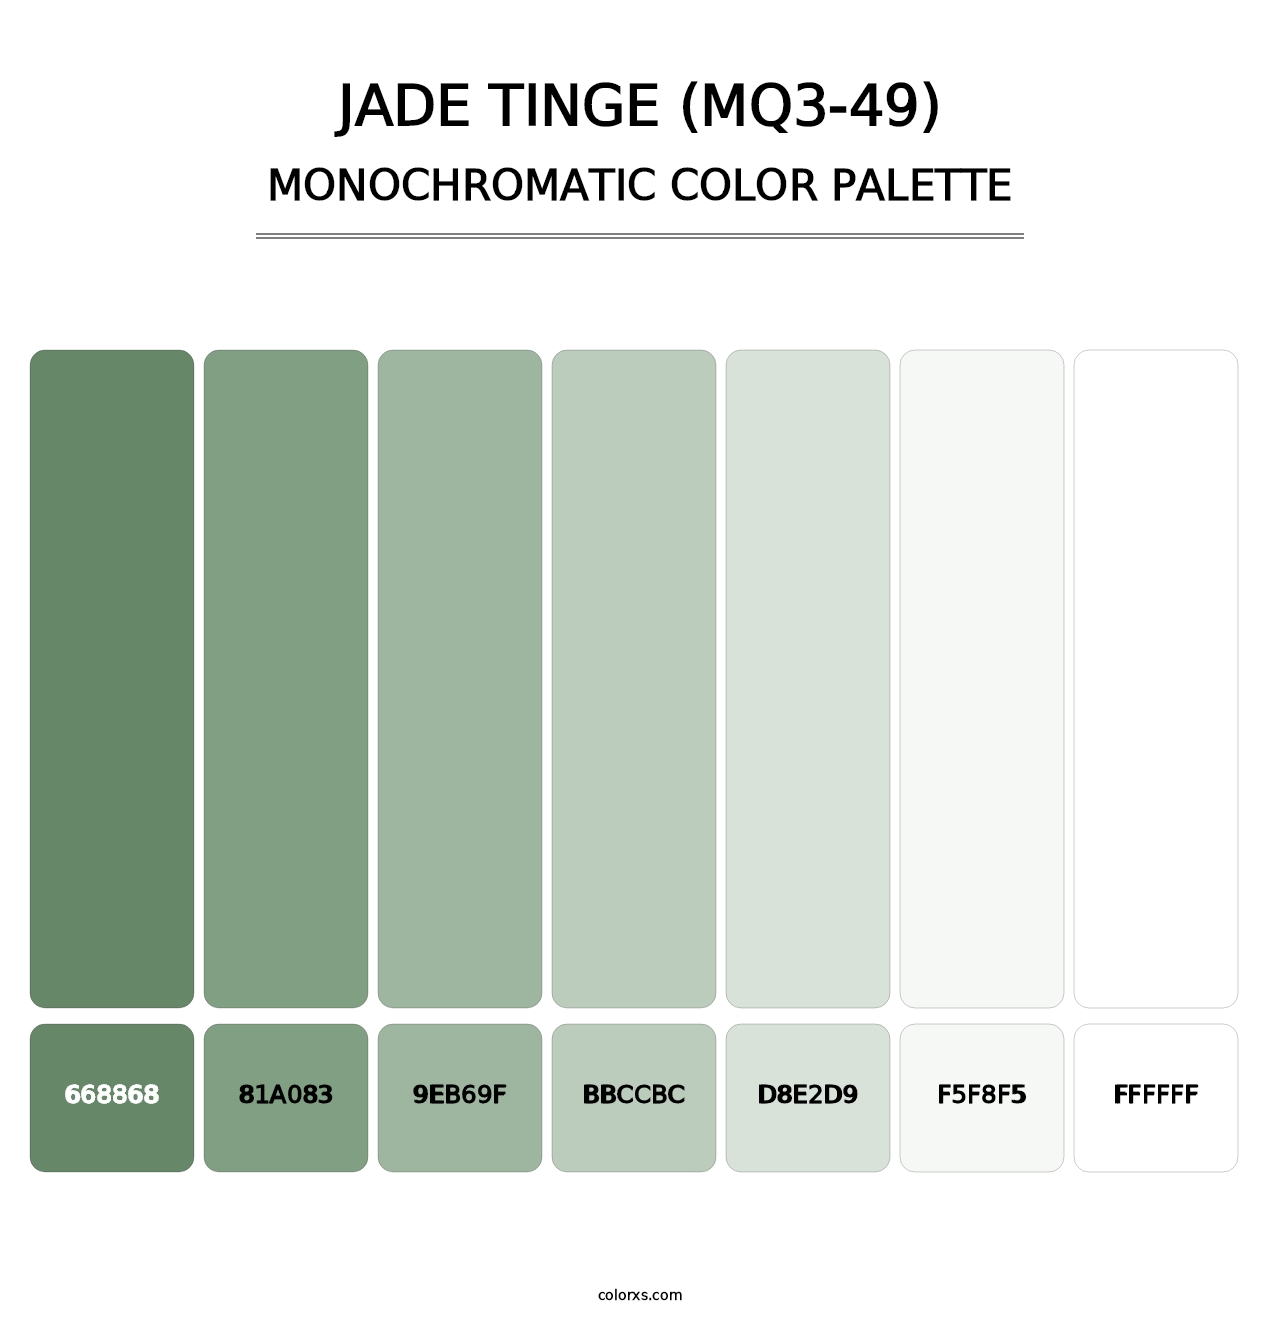 Jade Tinge (MQ3-49) - Monochromatic Color Palette